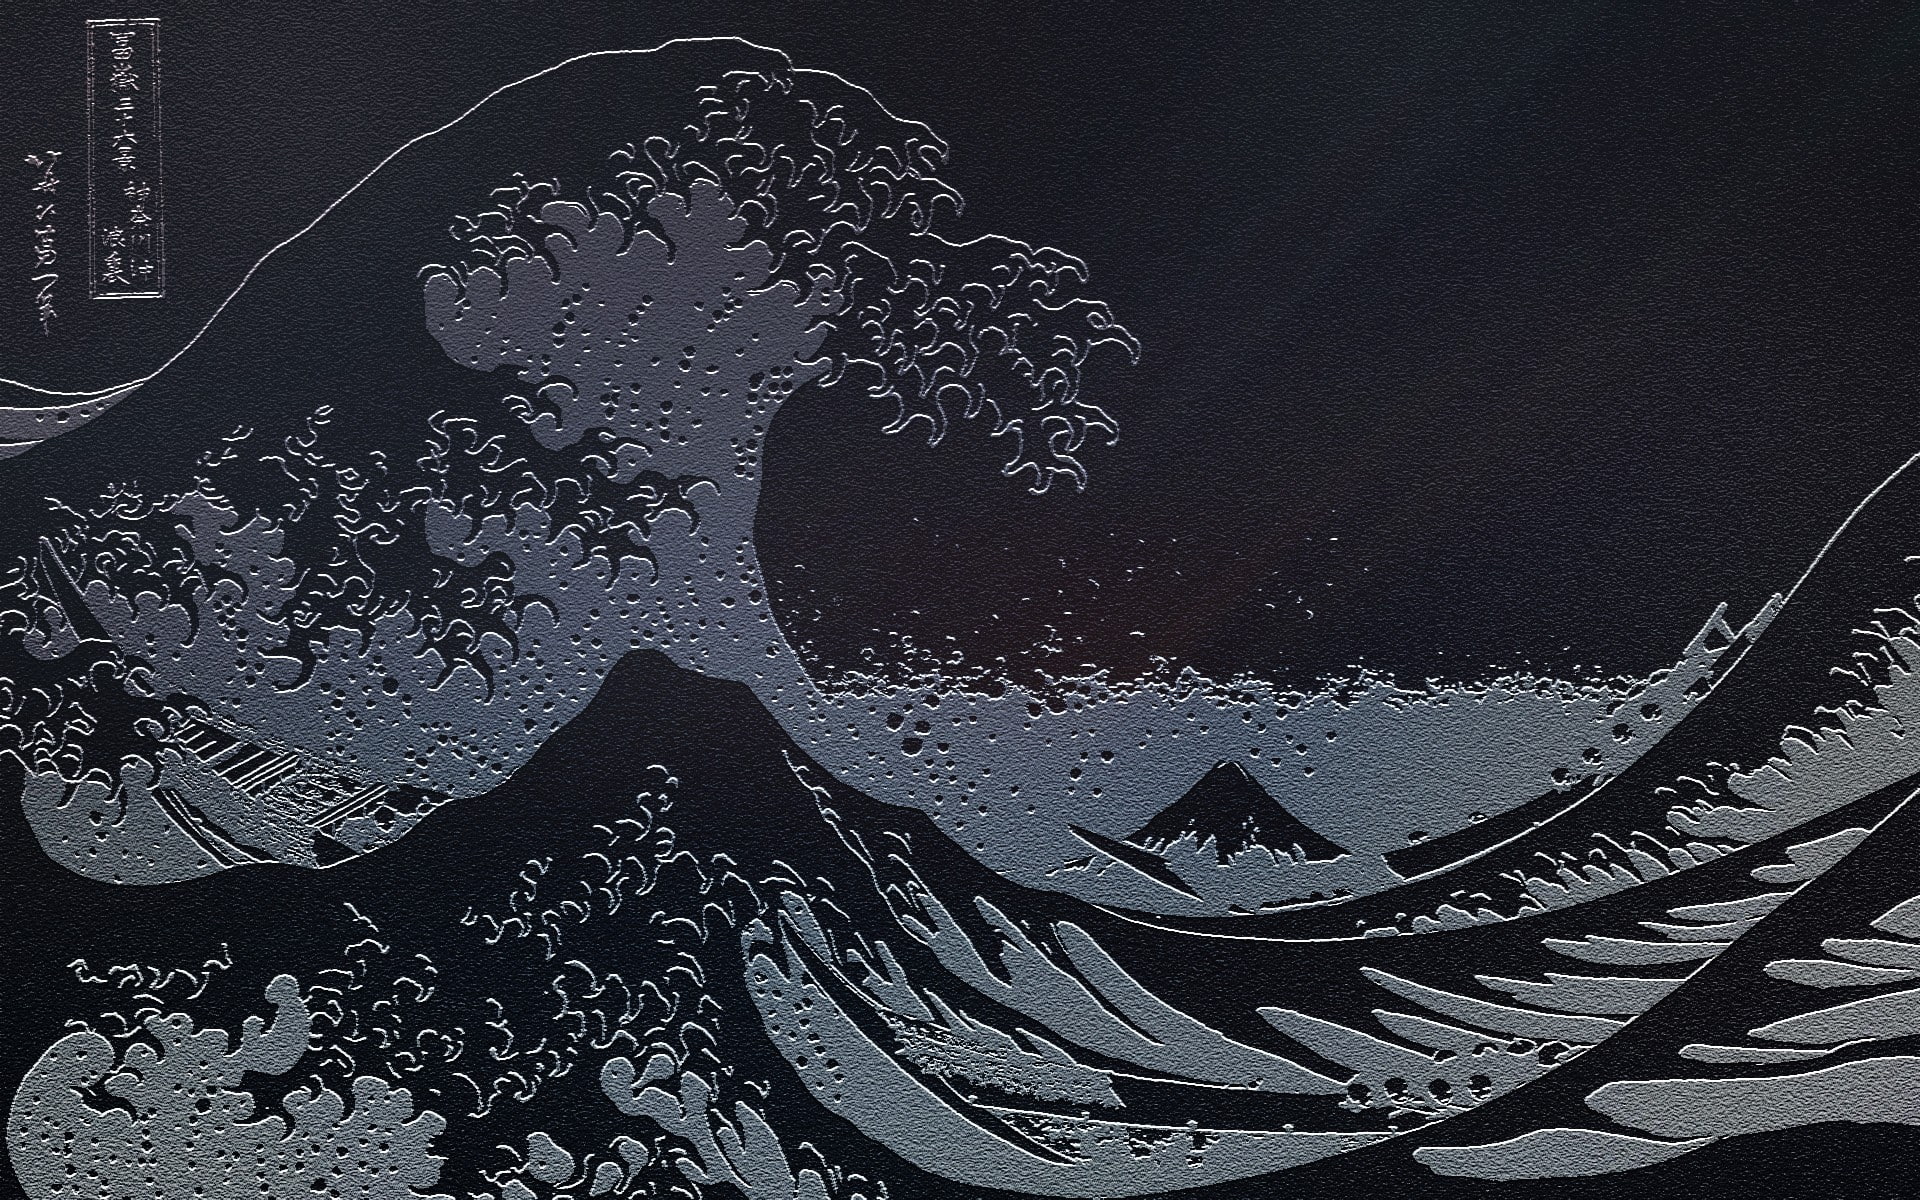 artwork, Great, Japanese, Kanagawa, off, sea, the, Wave, waves